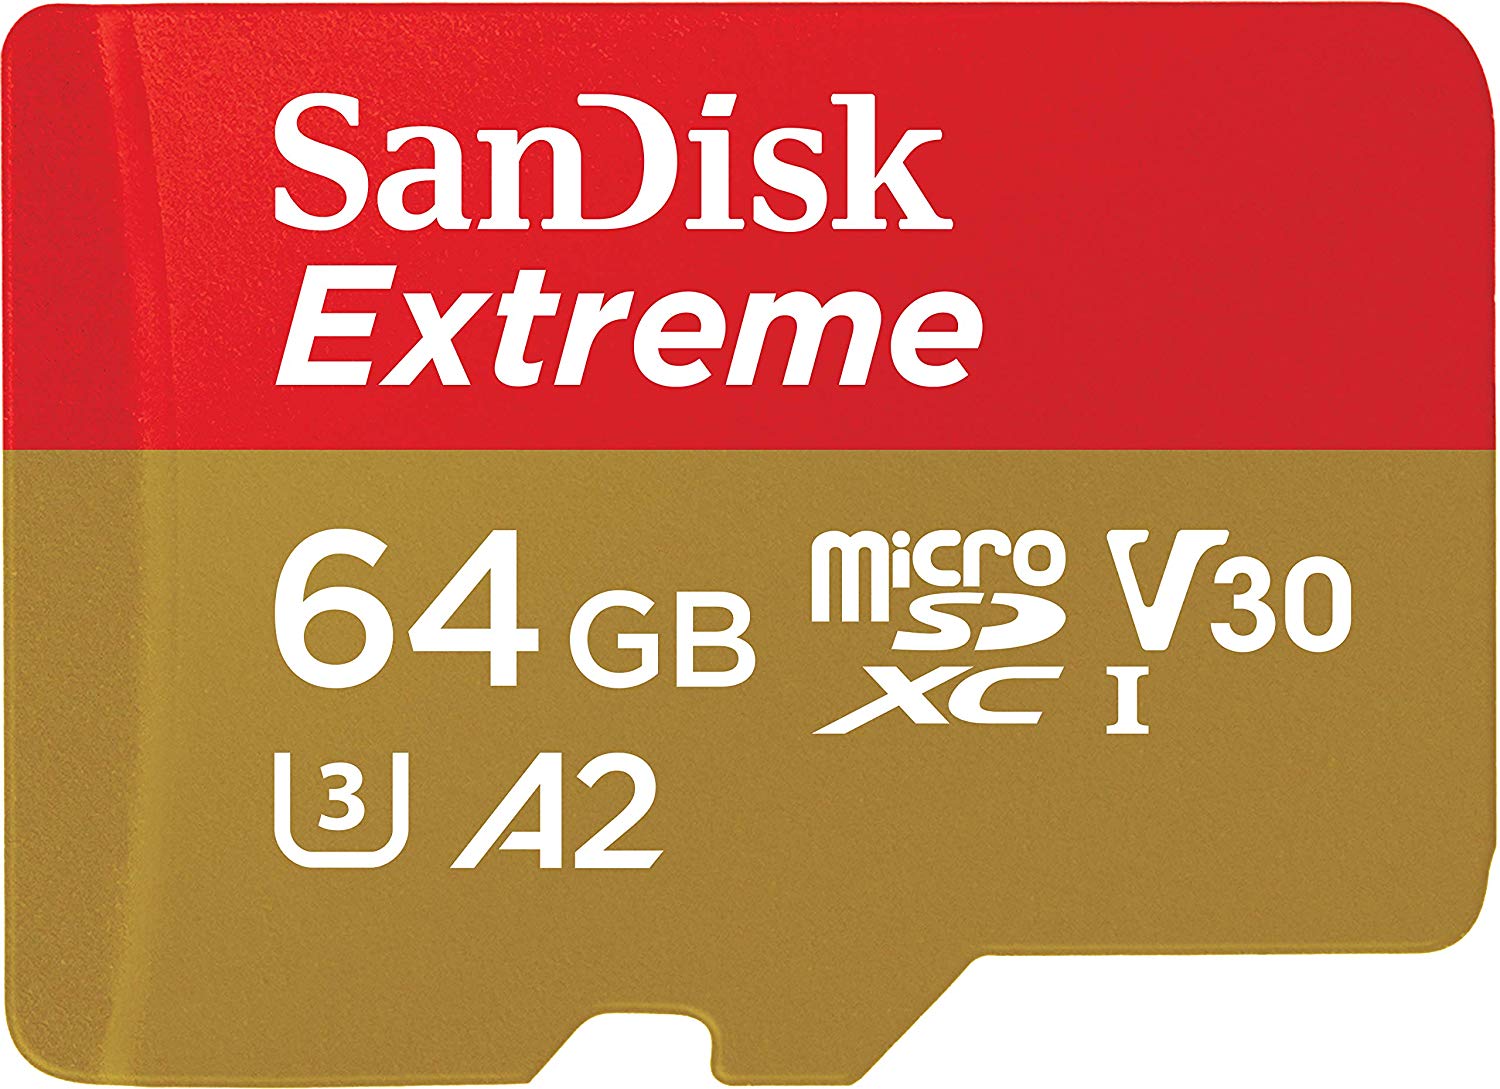 Extreme Series microSD card